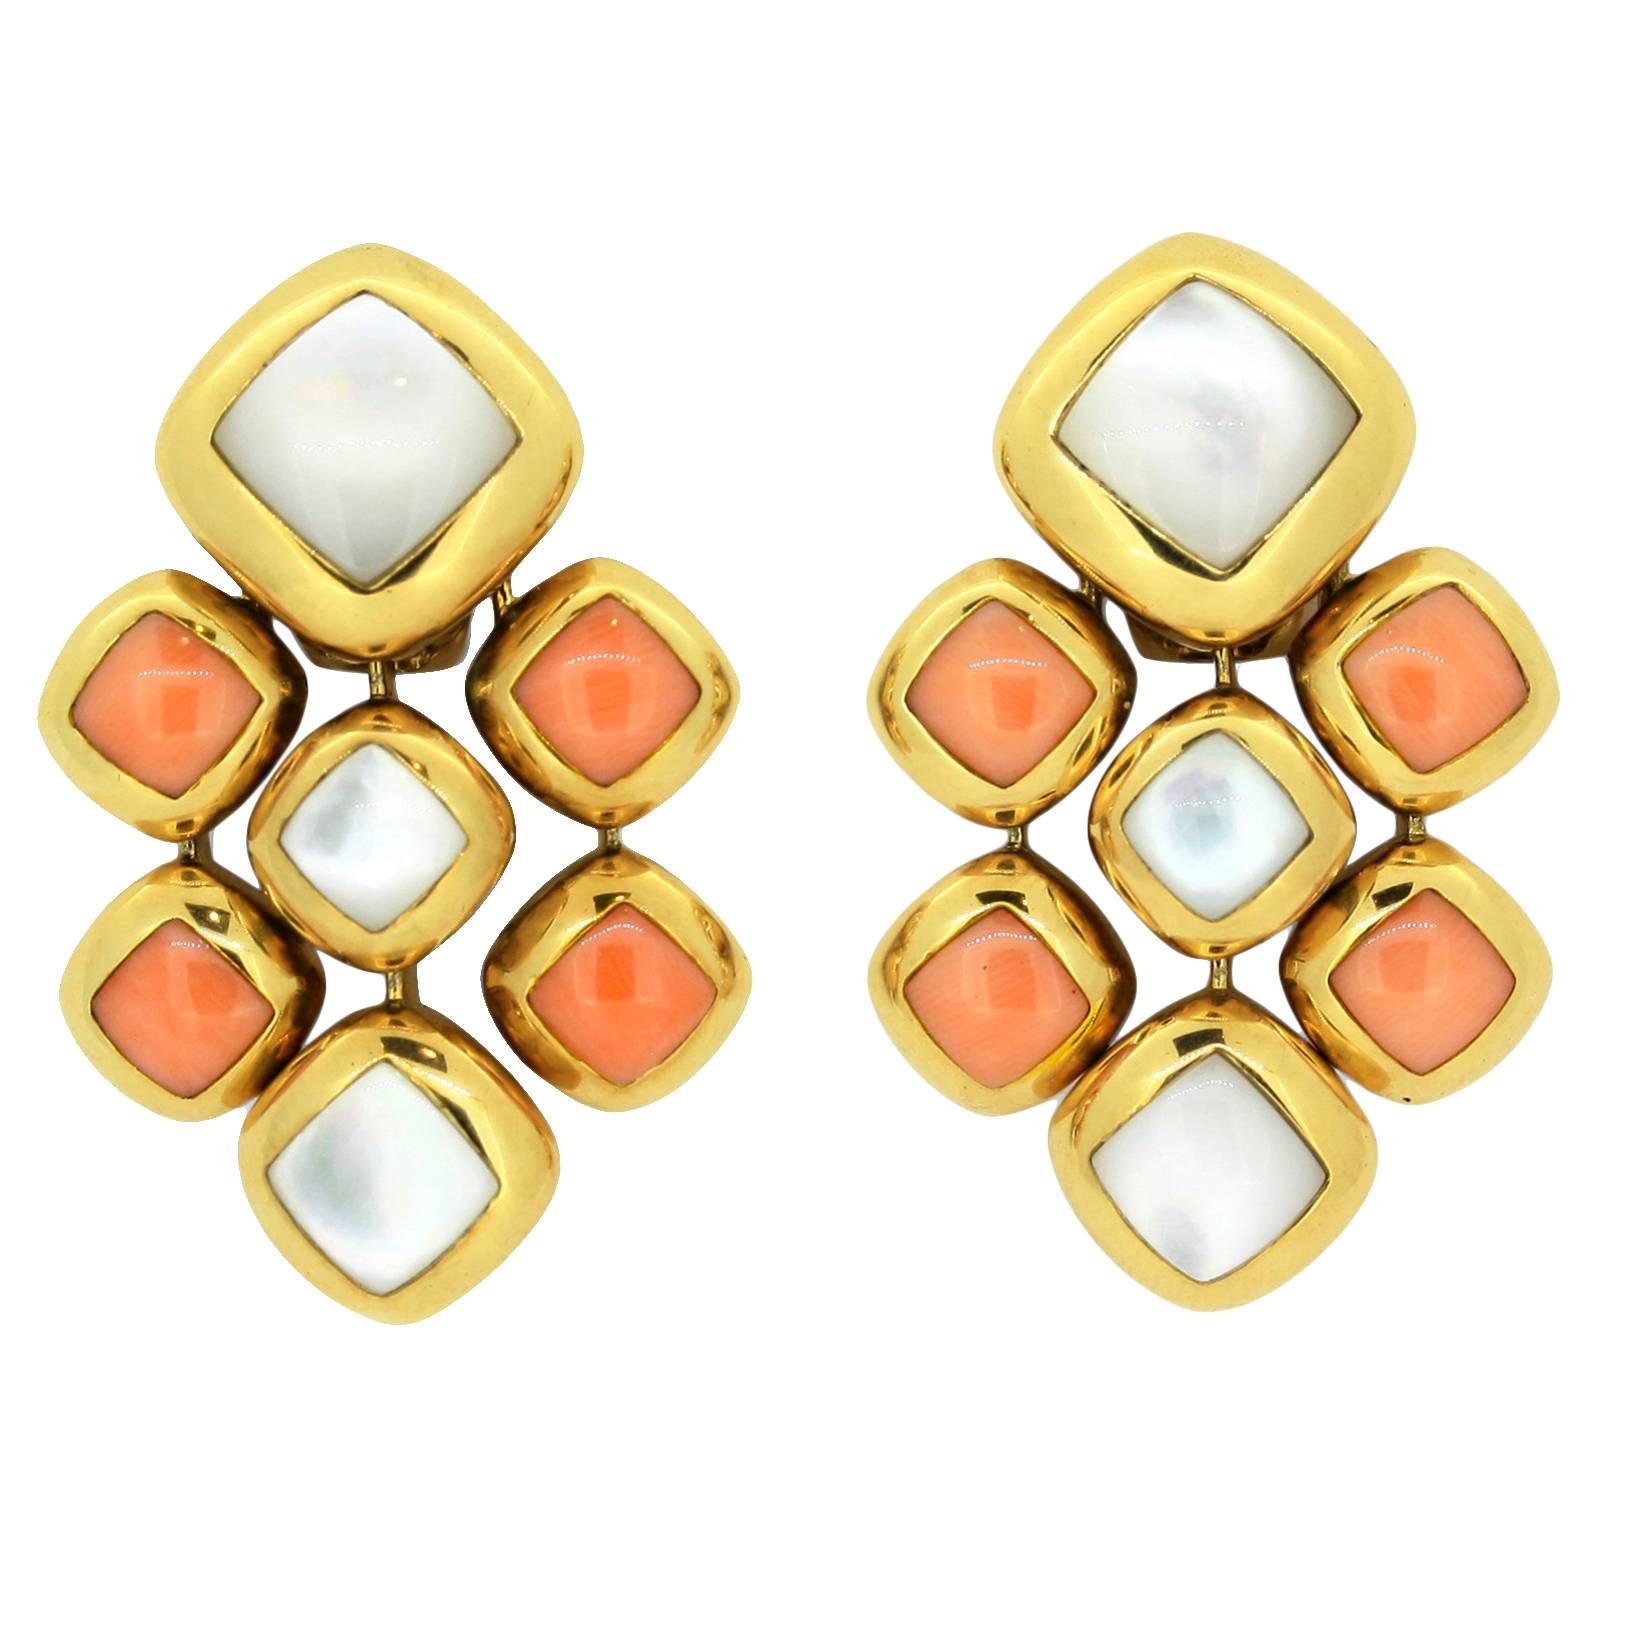  1980s Van Cleef & Arpels Coral Mother of Pearl Gold Earrings For Sale